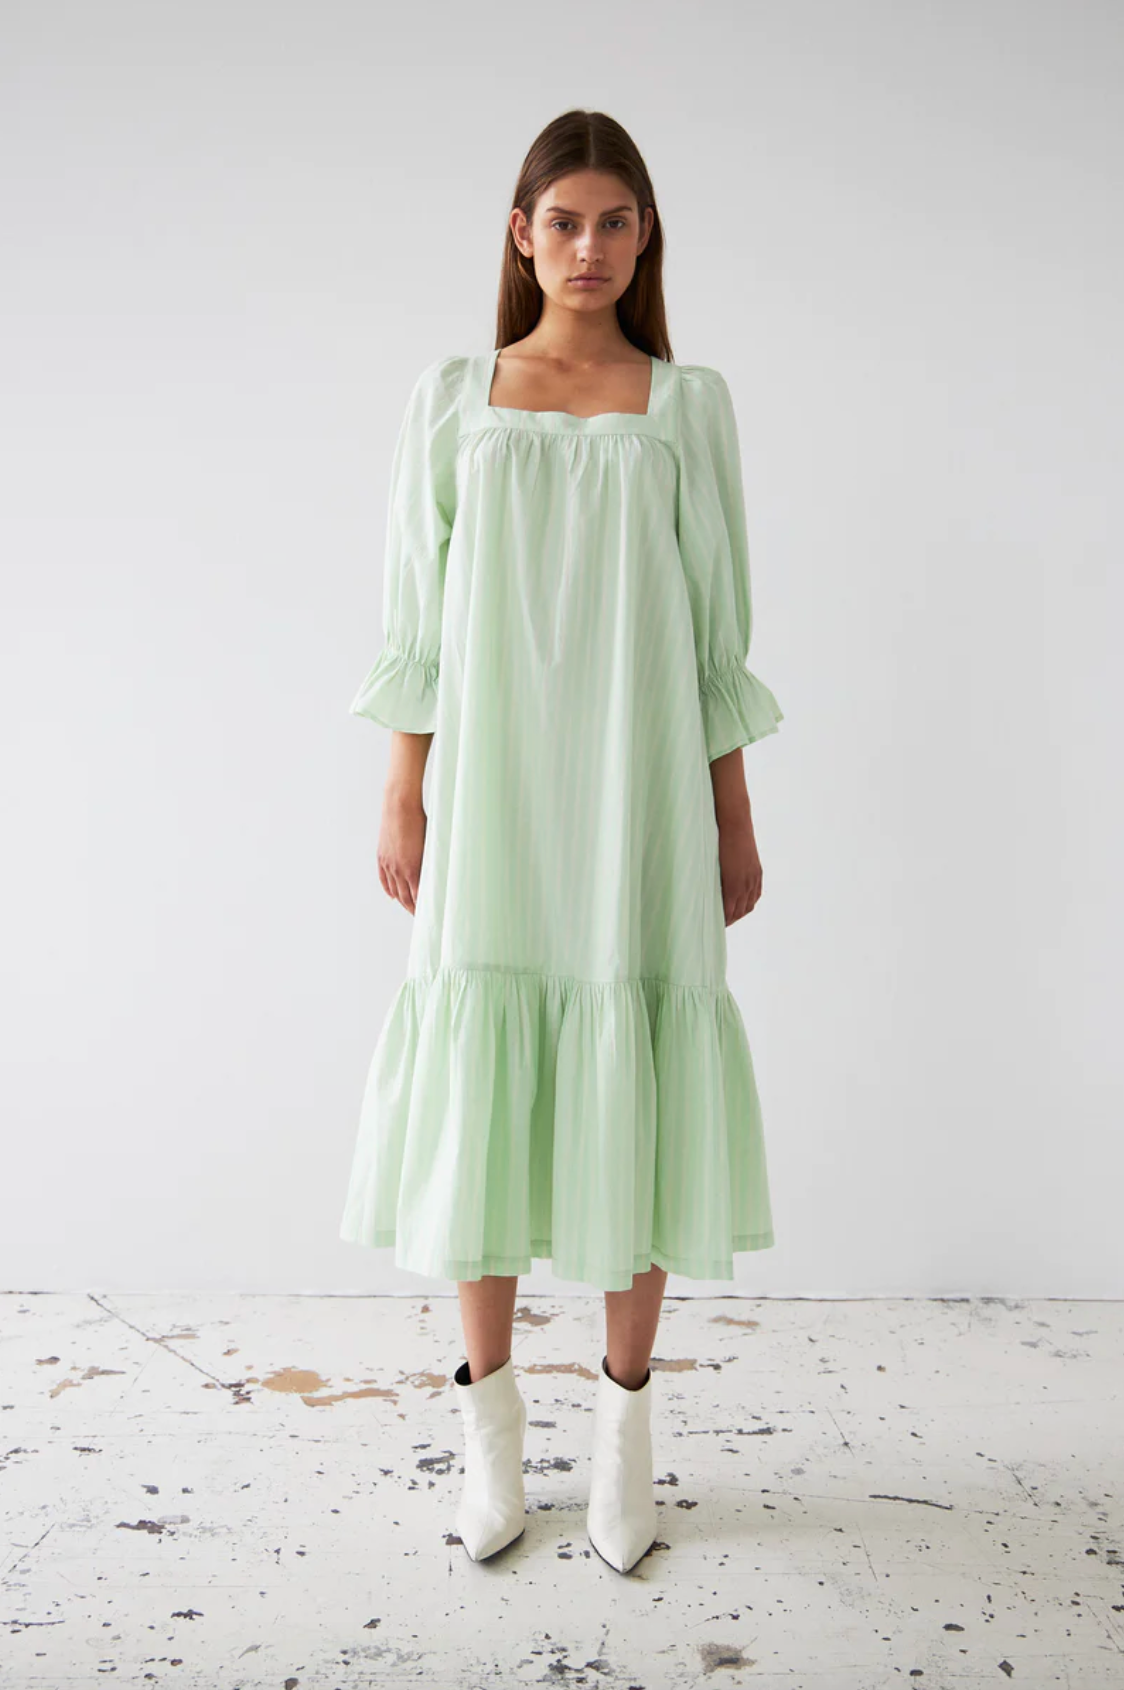 Stella Nova - Mint Tea Stripe Dress - Image 2